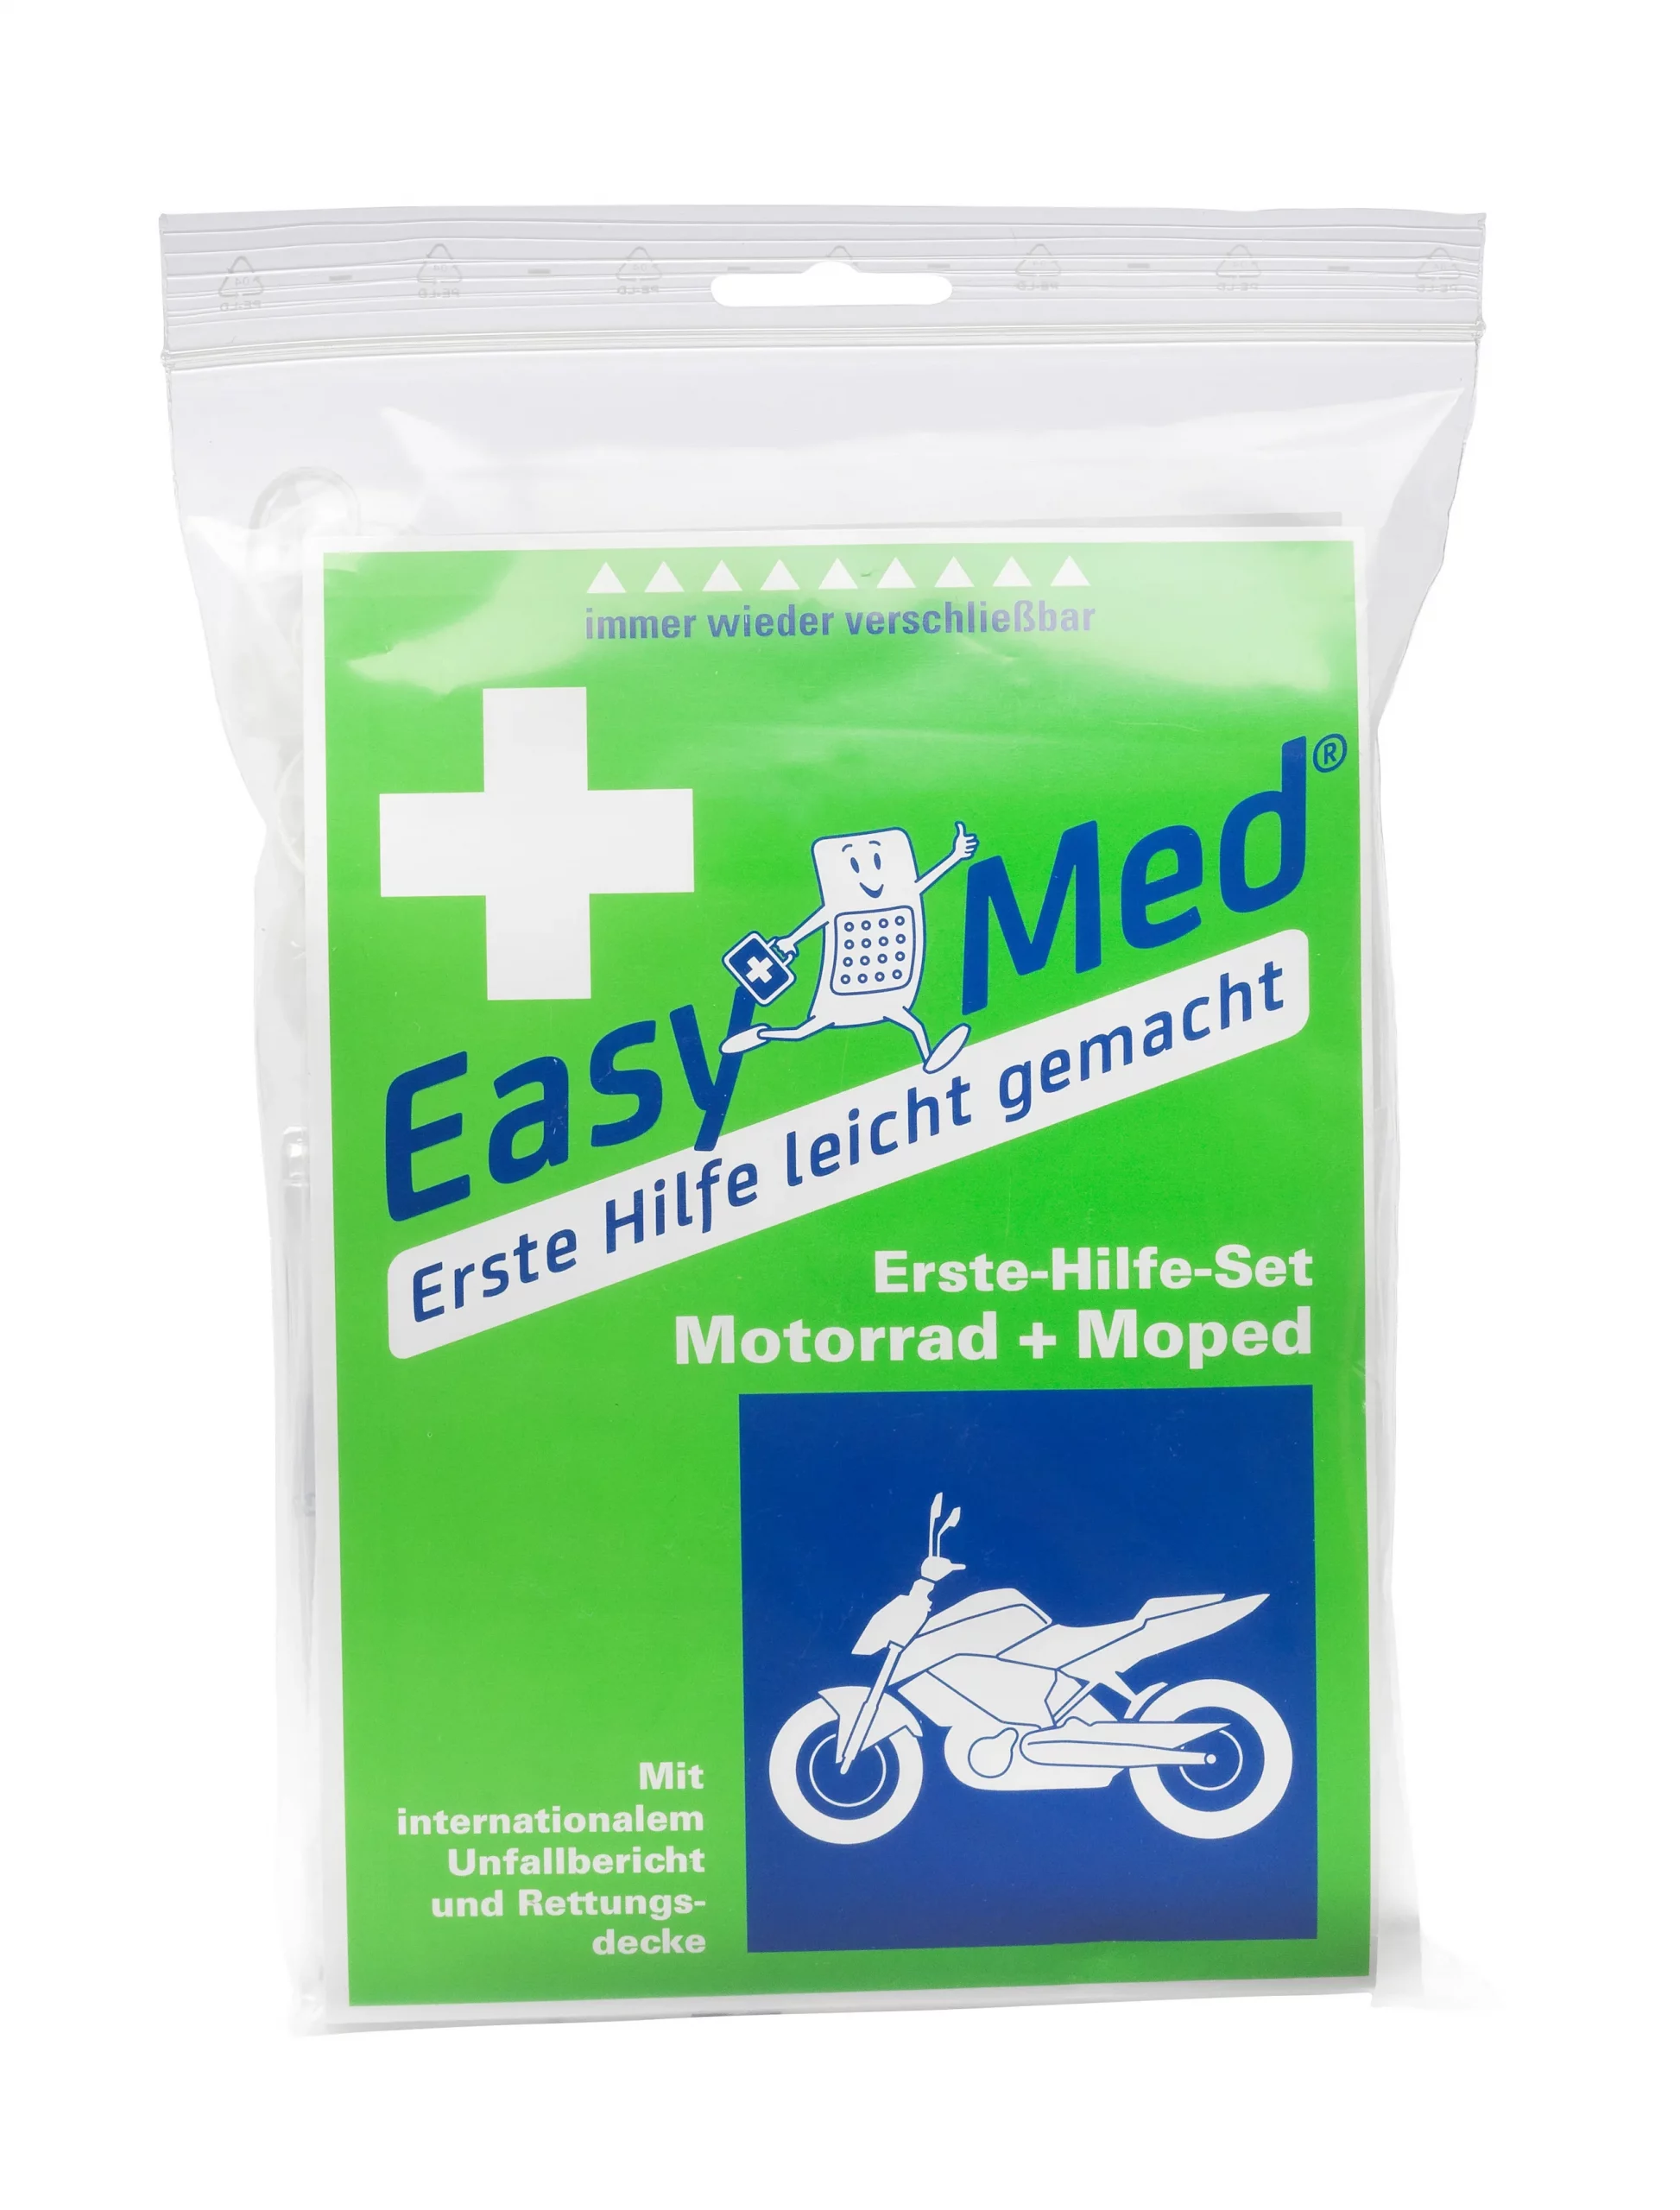 EasyMed Erste Hilfe Set Motorrad online kaufen bei Apothekenbote